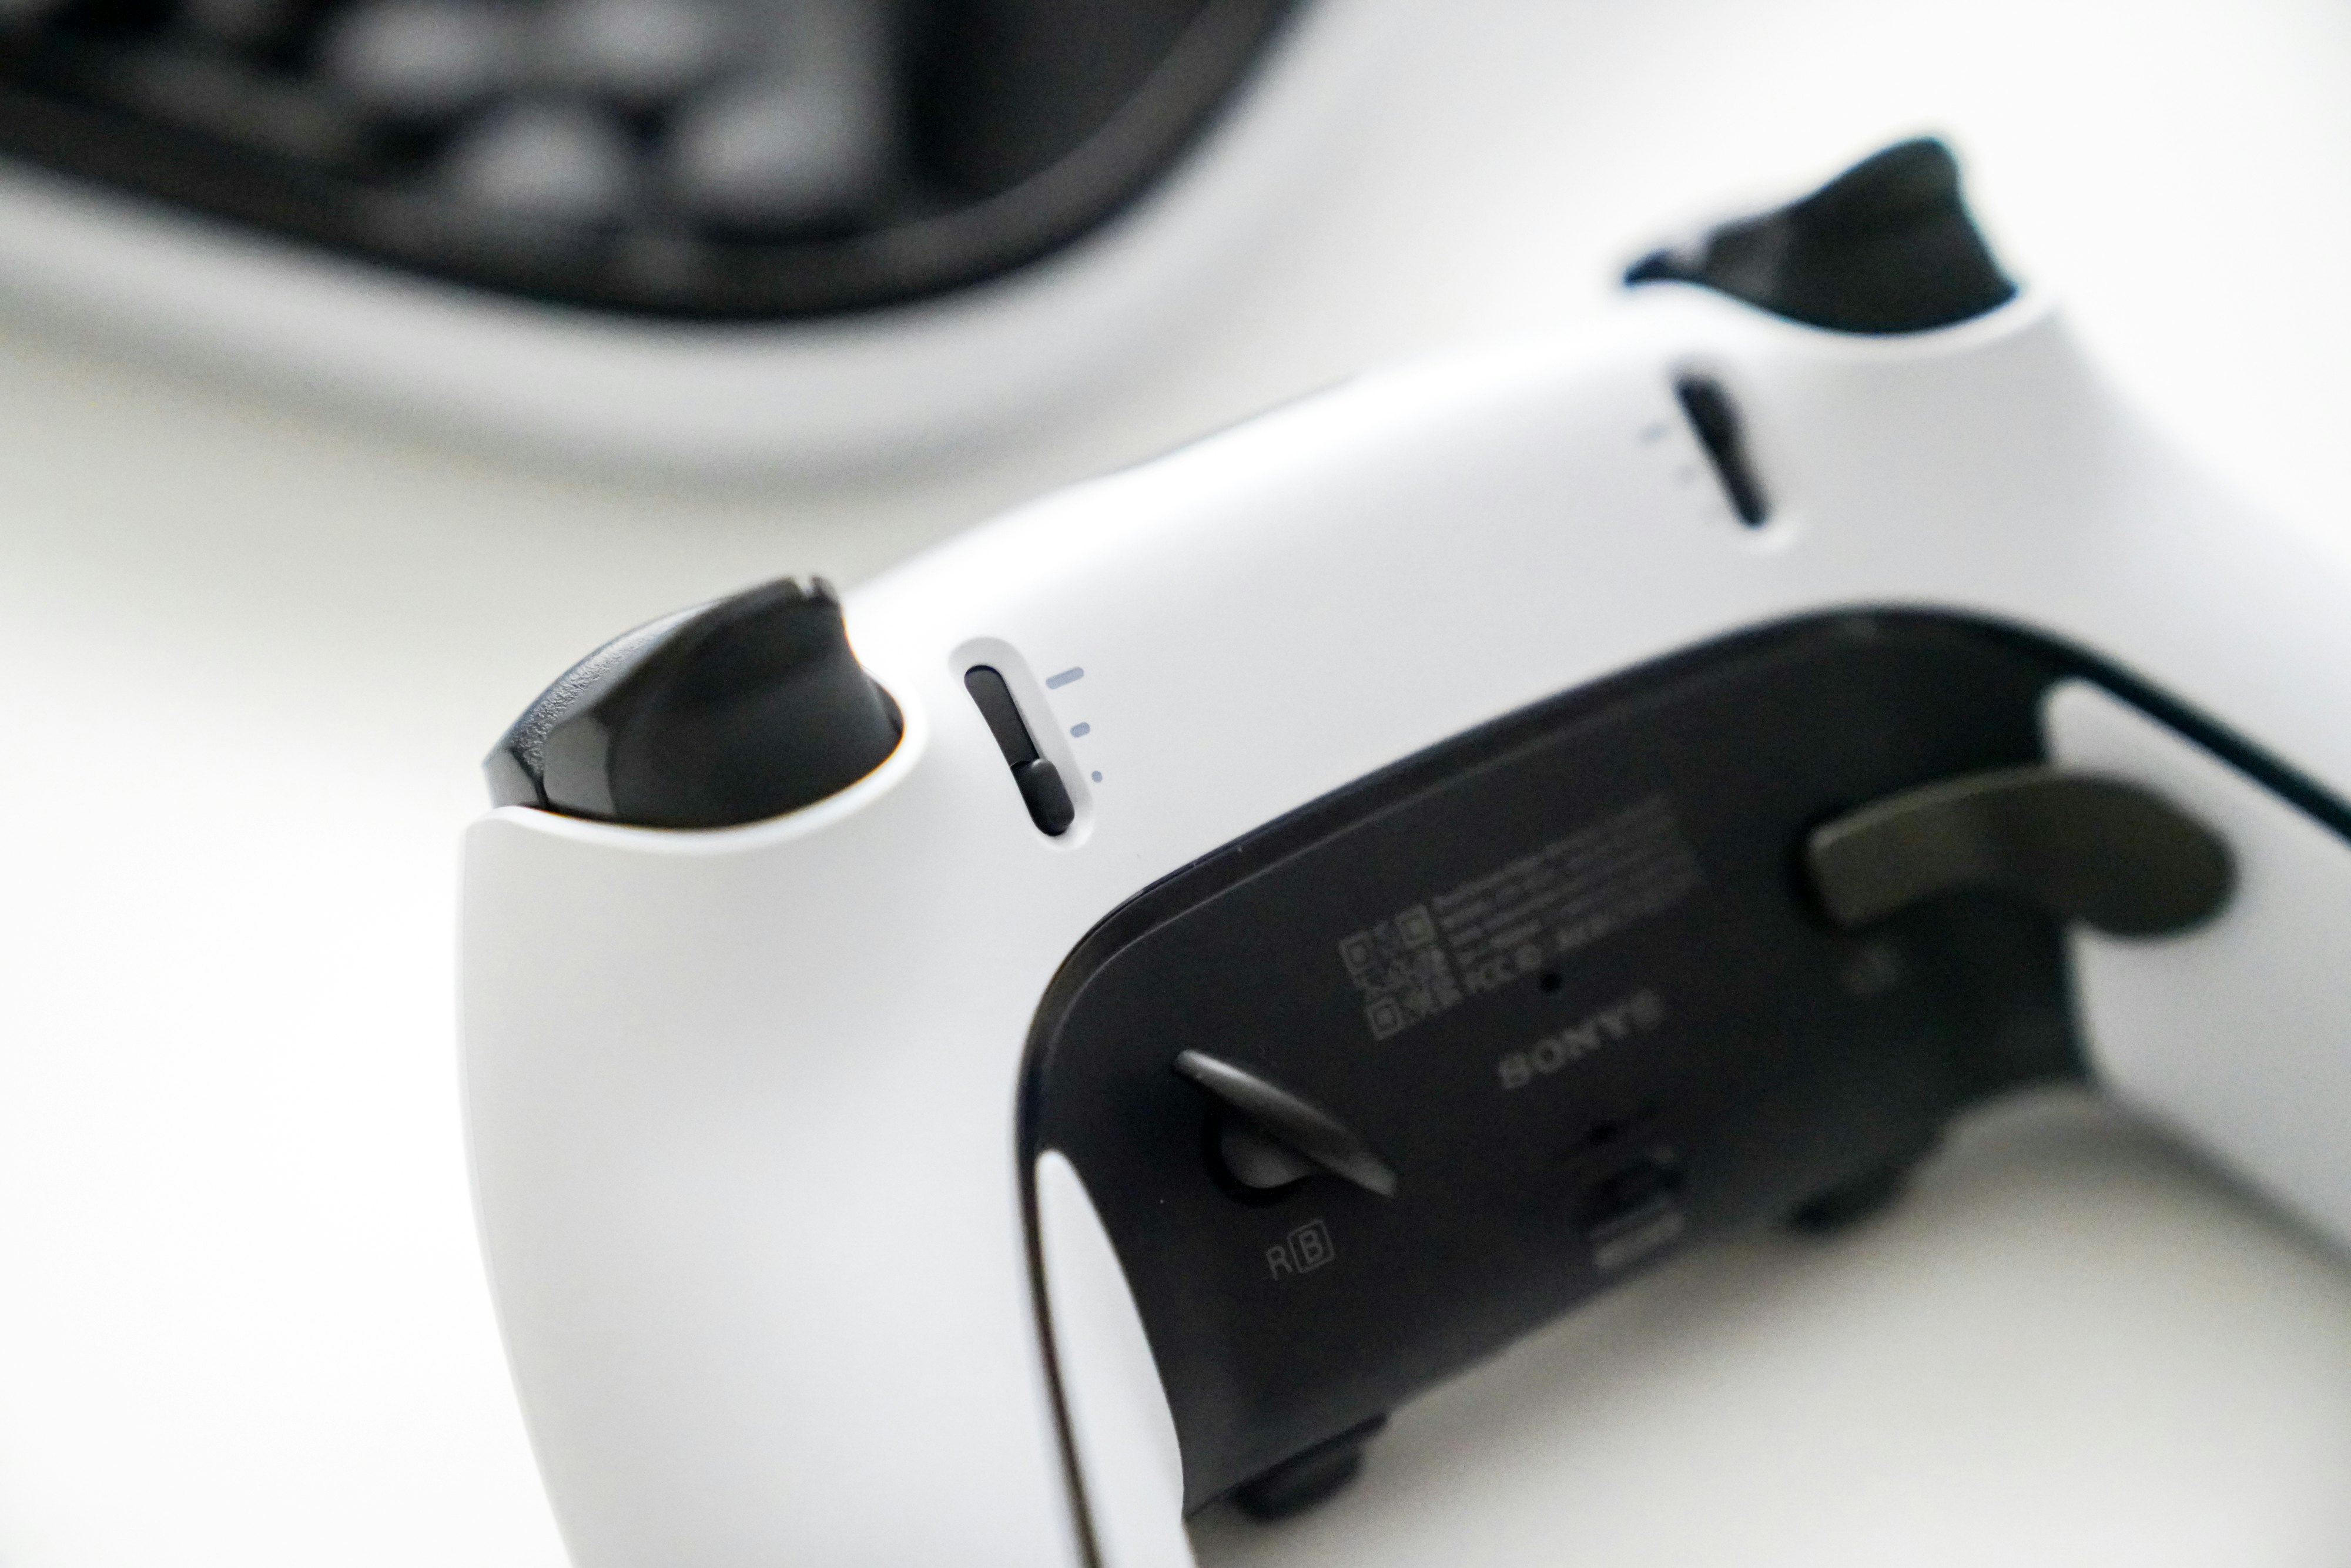 Sony DualSense Edge Review: A $200 PS5 Controller